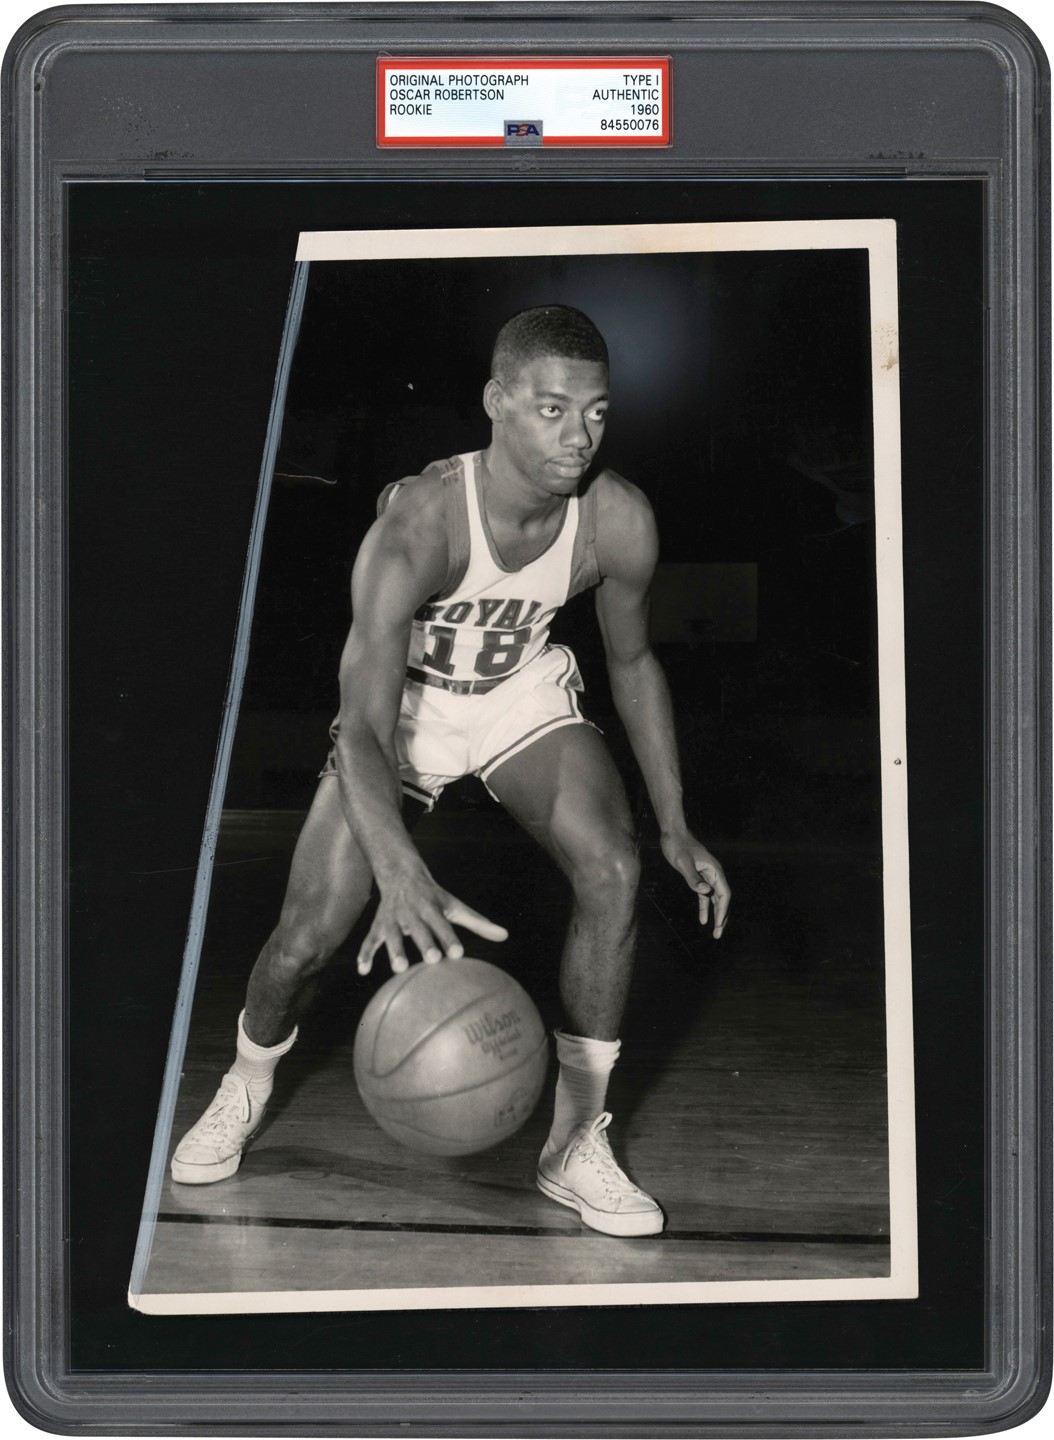 Vintage Sports Photographs - 1960 Oscar Robertson Rookie Photograph - His Earliest Known NBA Photo (PSA Type I)